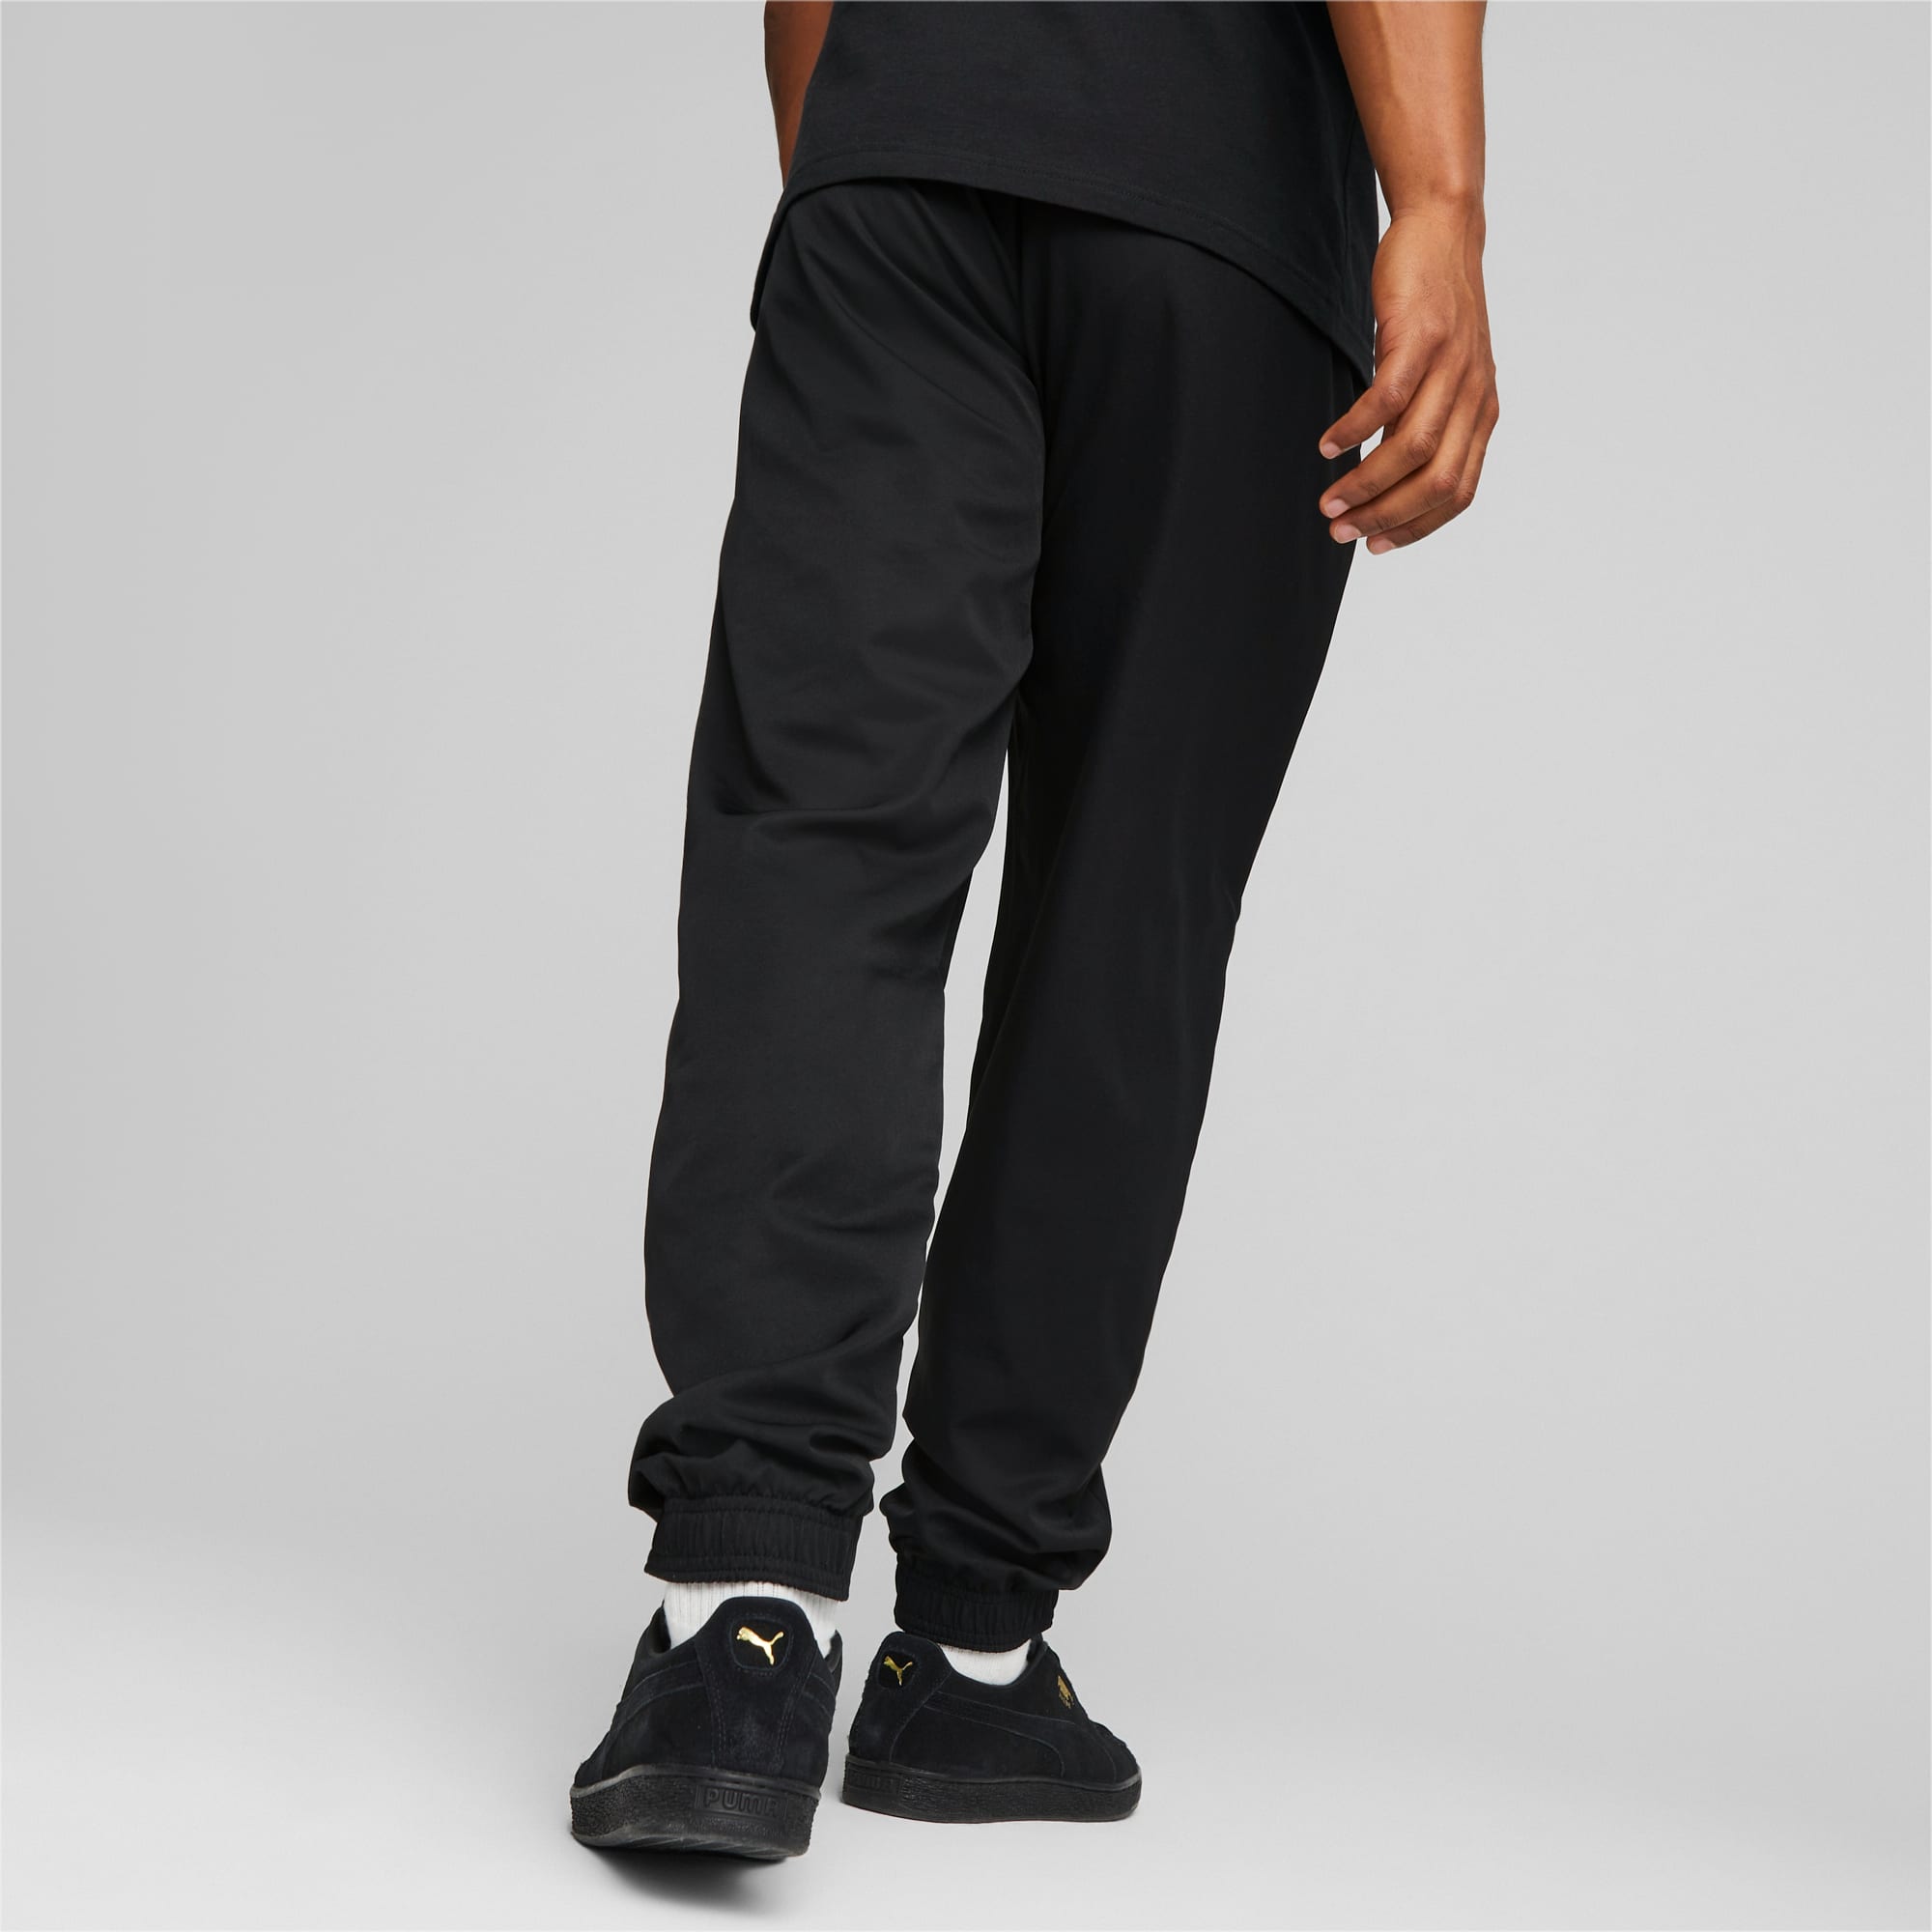 PUMA Active Woven Men's Pants, Black, Size XXL, Clothing